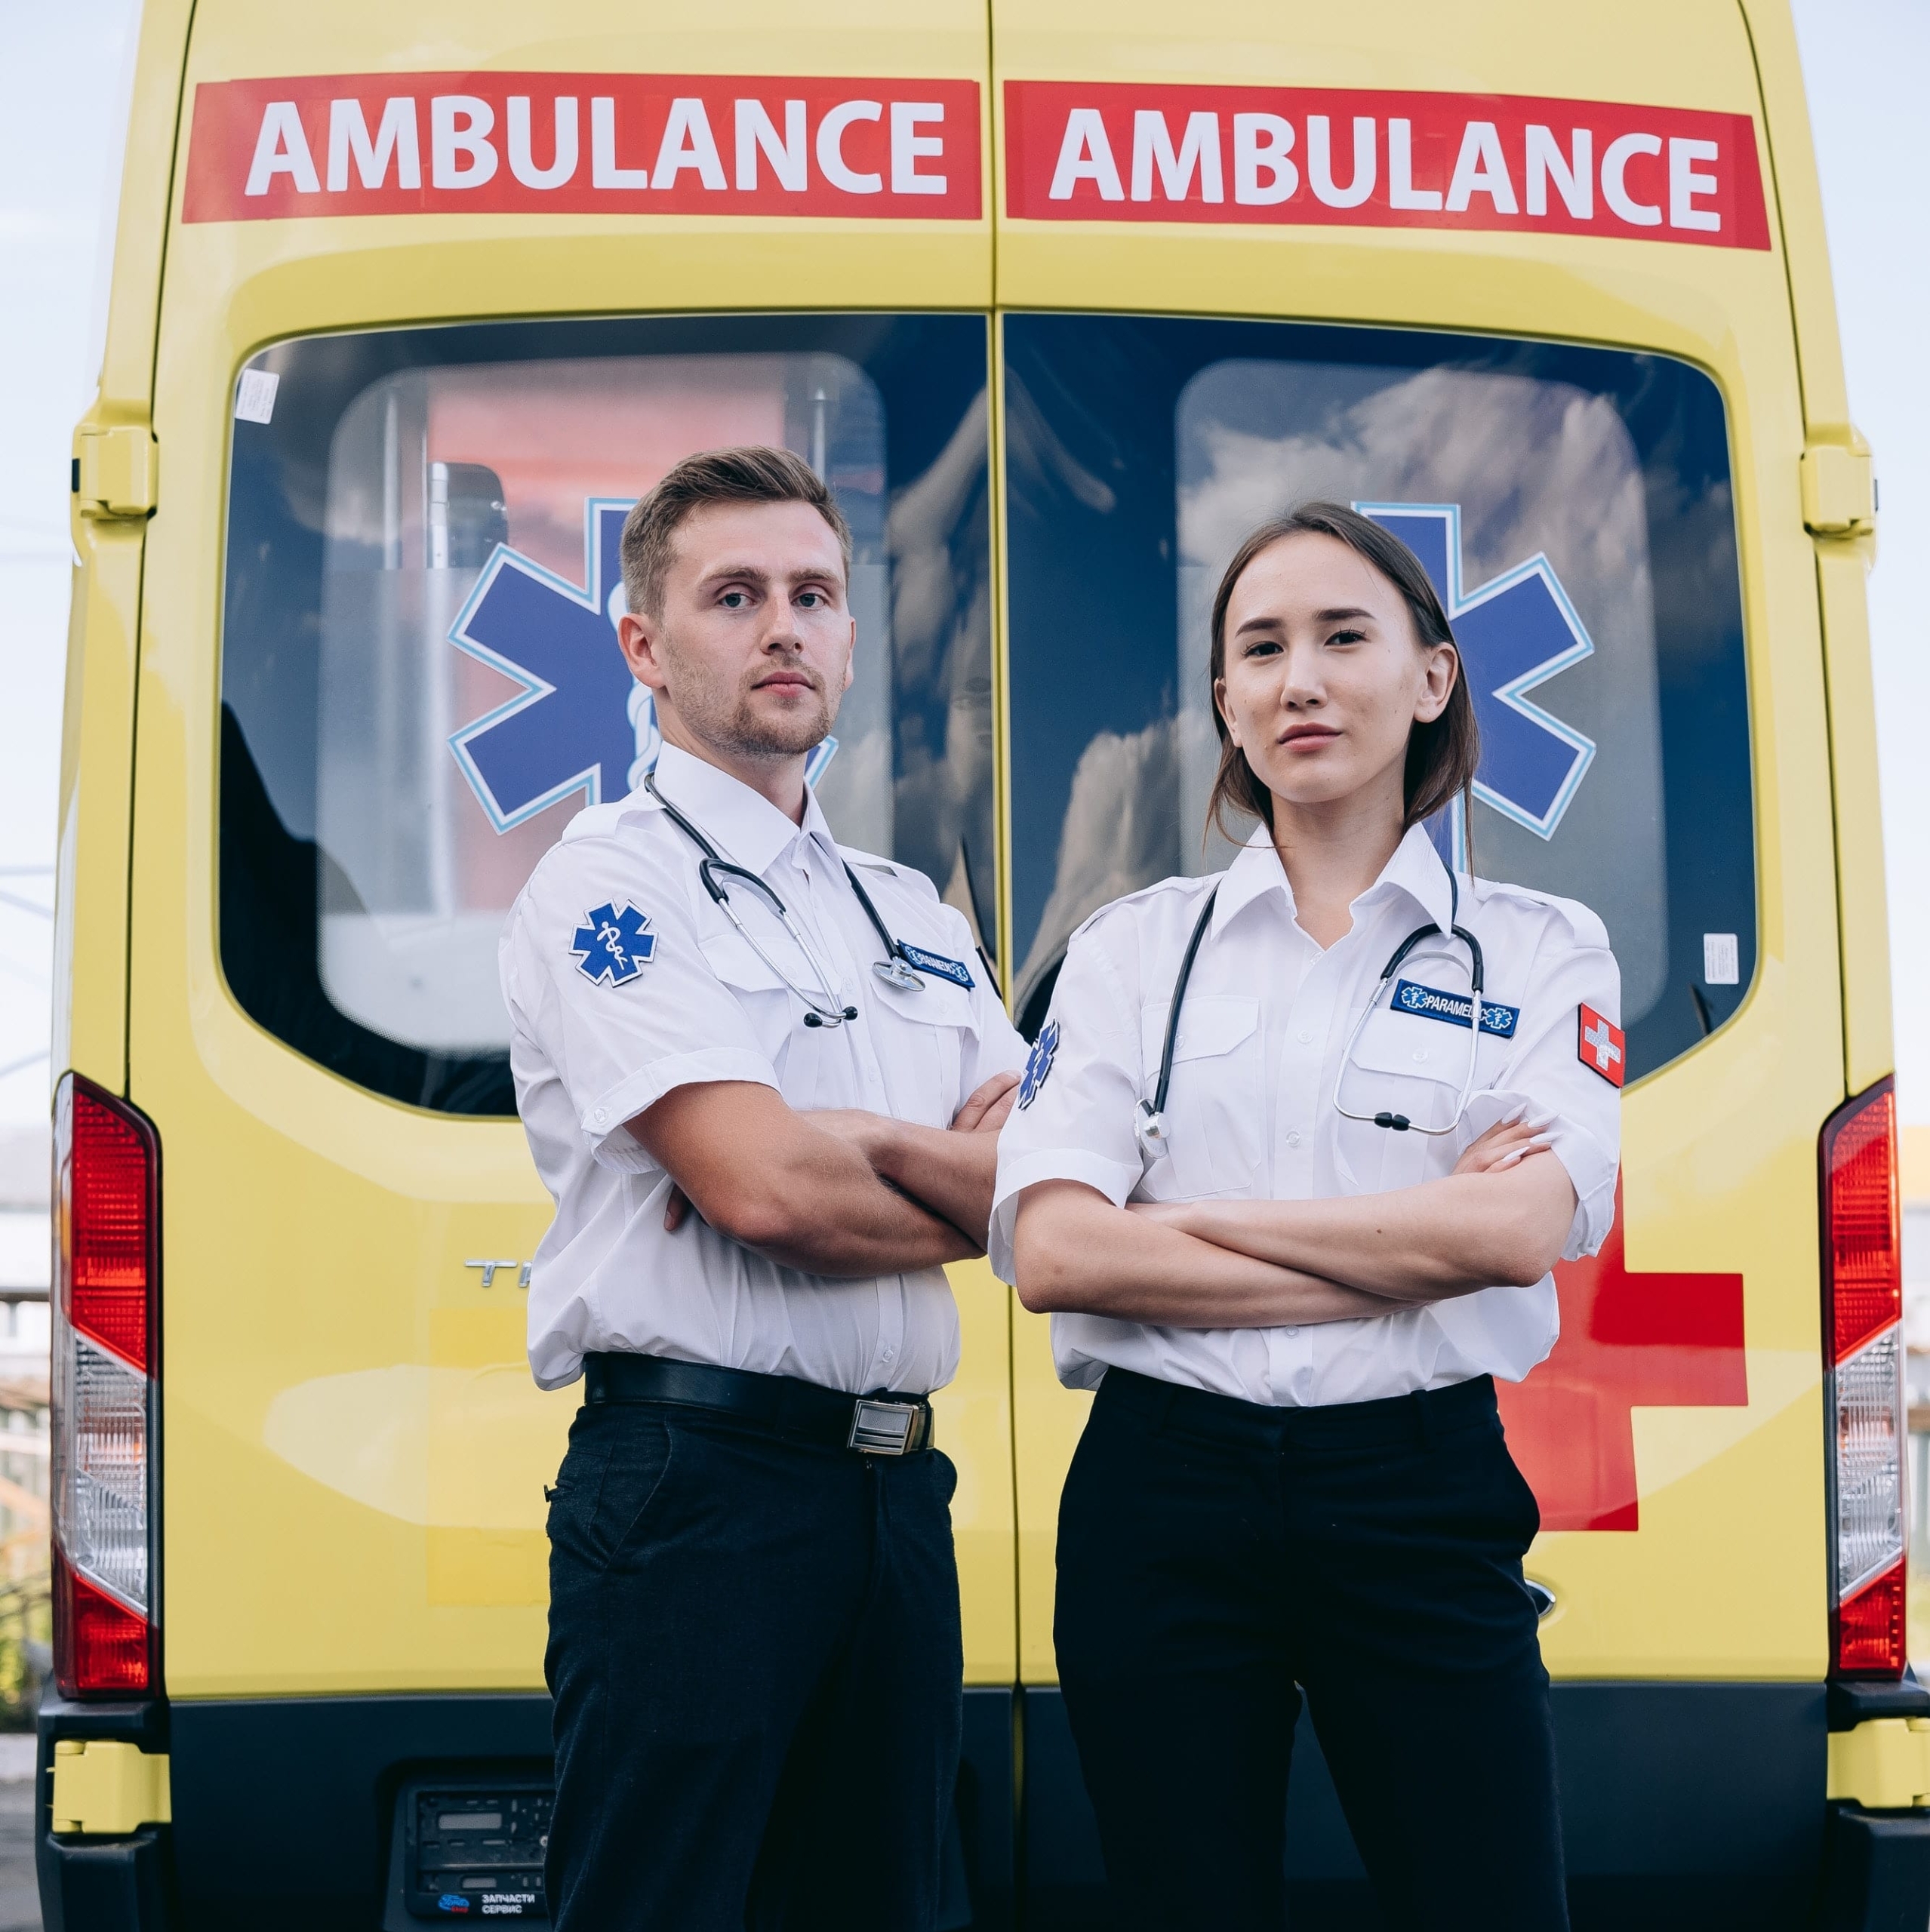 ambulance - emergency and non-emergency service